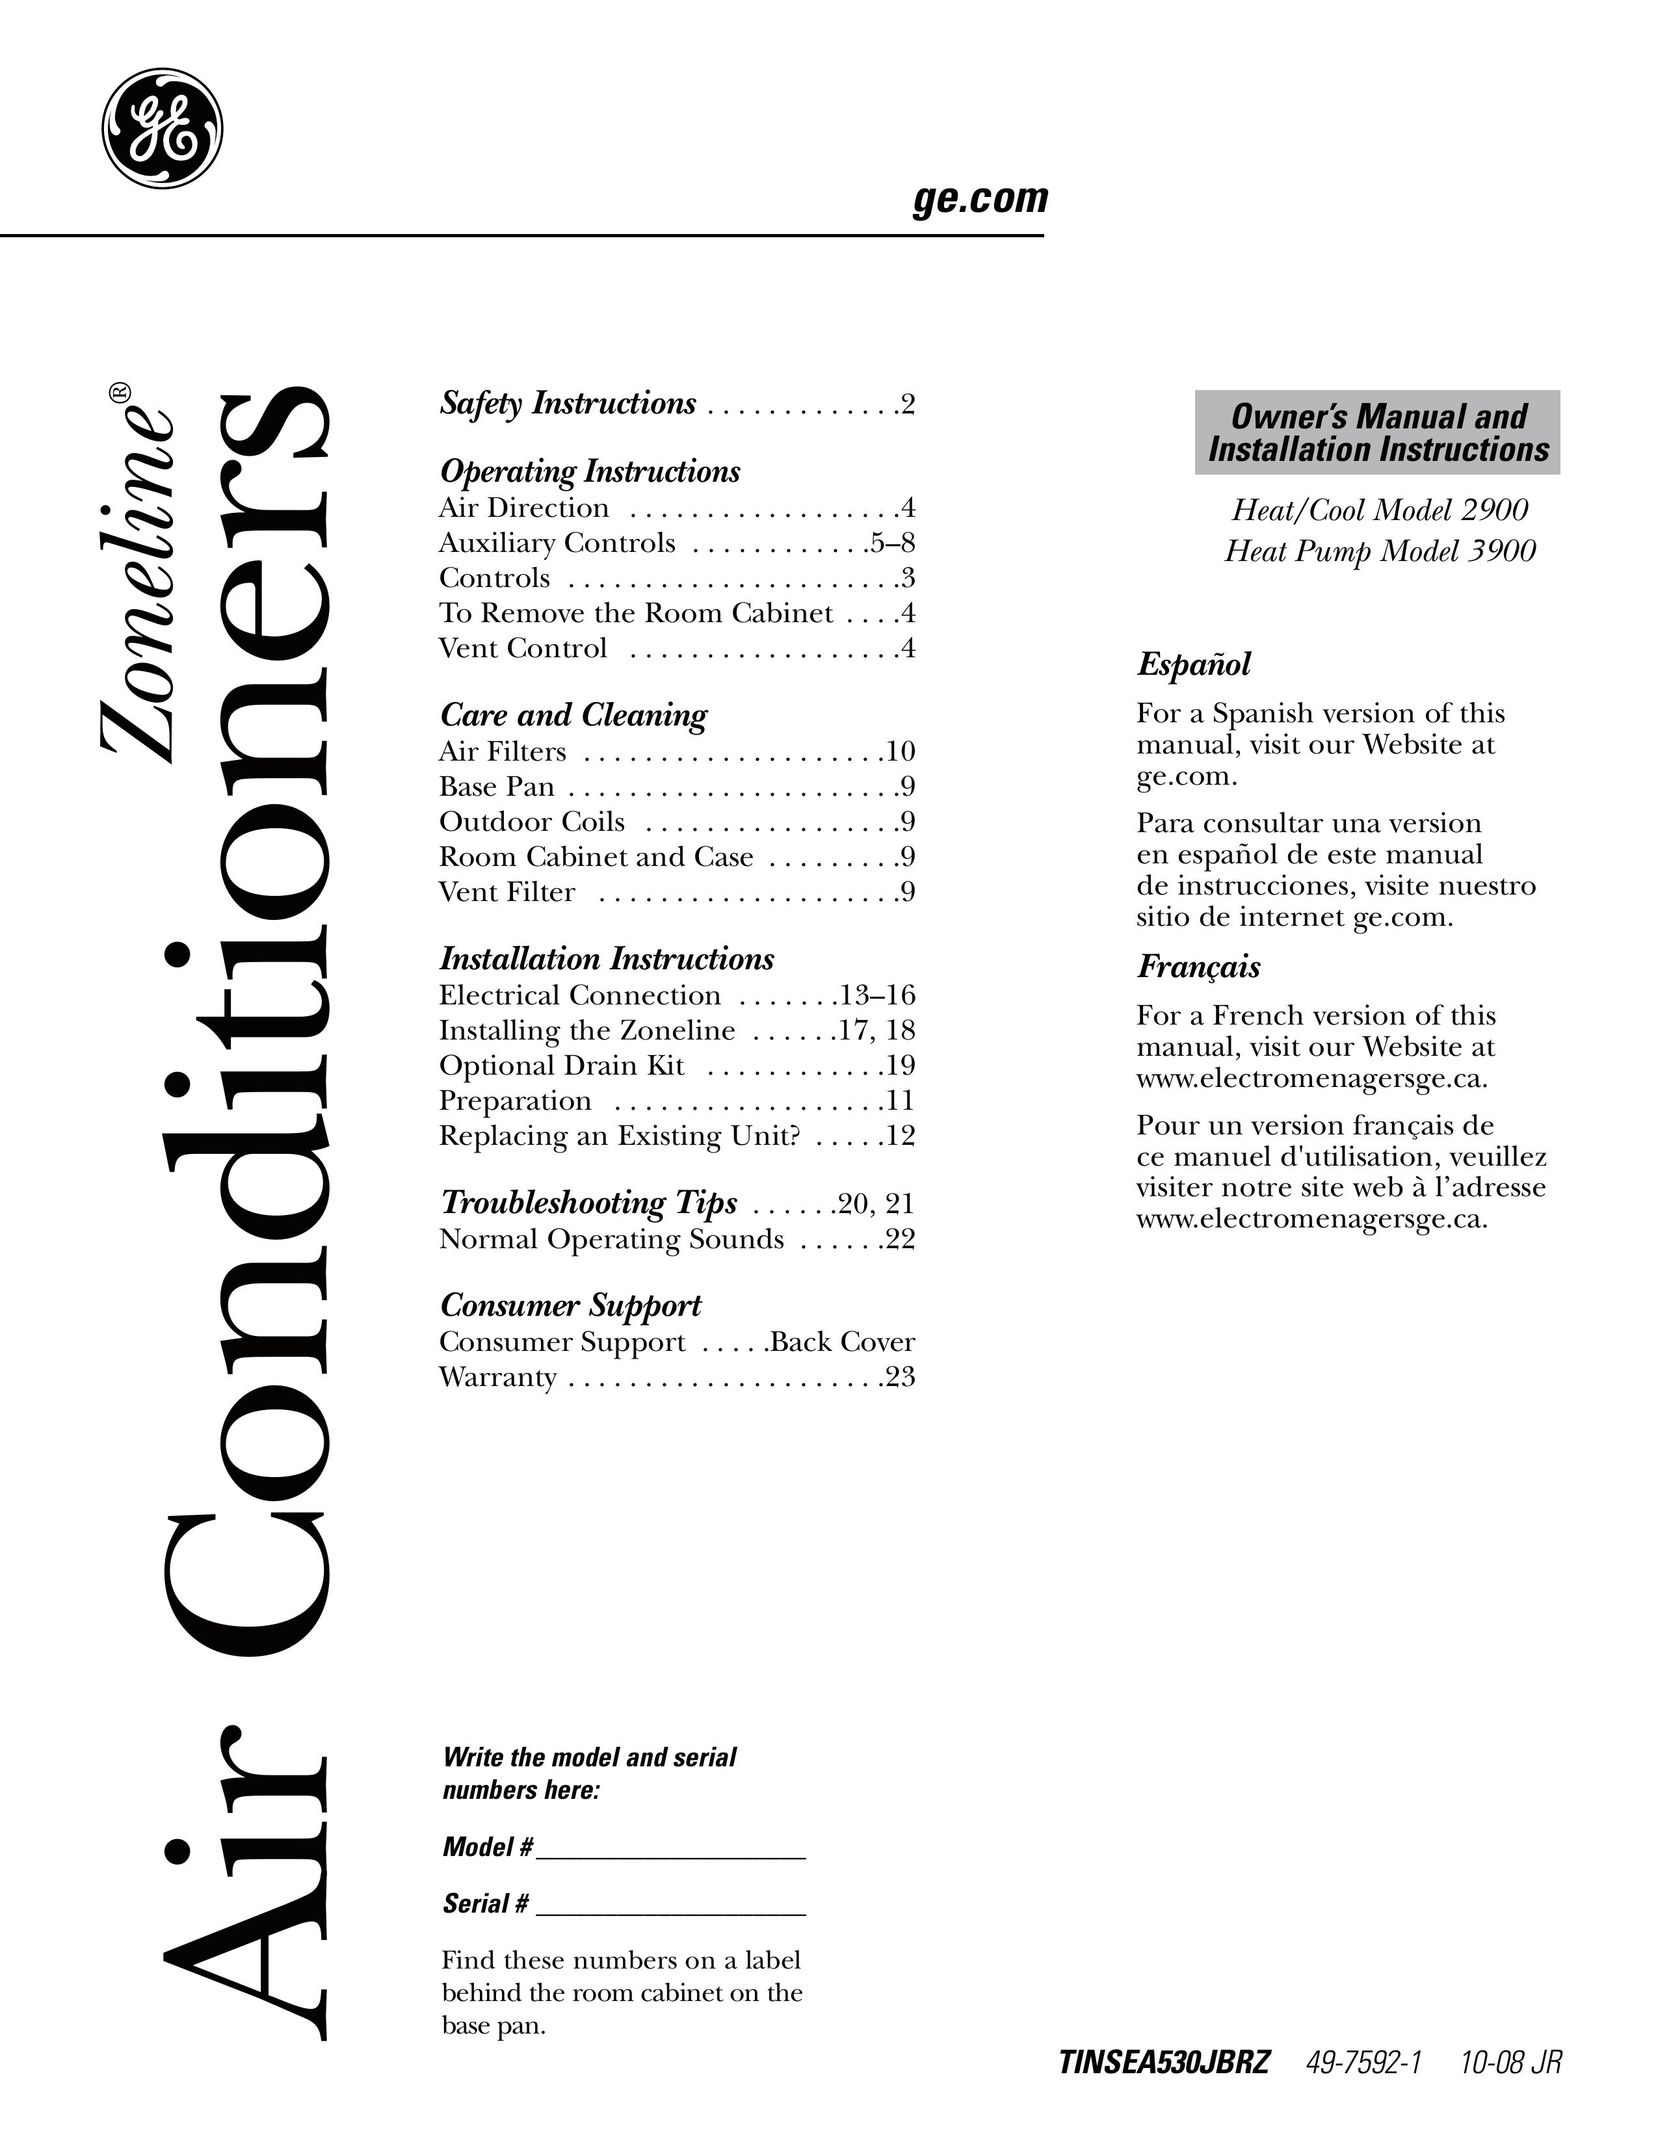 GE 3900 Air Conditioner User Manual